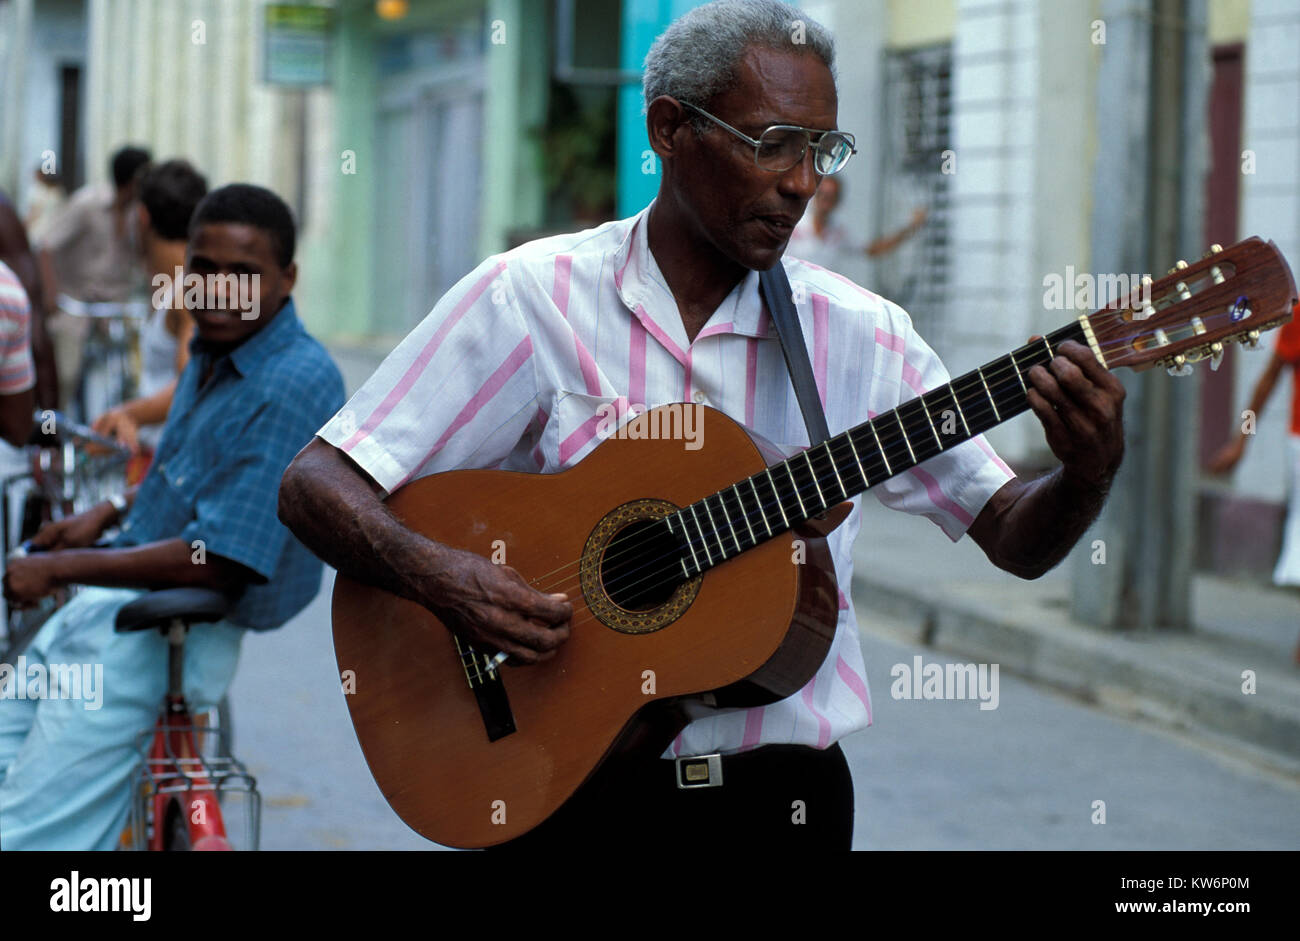 Musicians at Guantanamo, Cuba Stock Photo